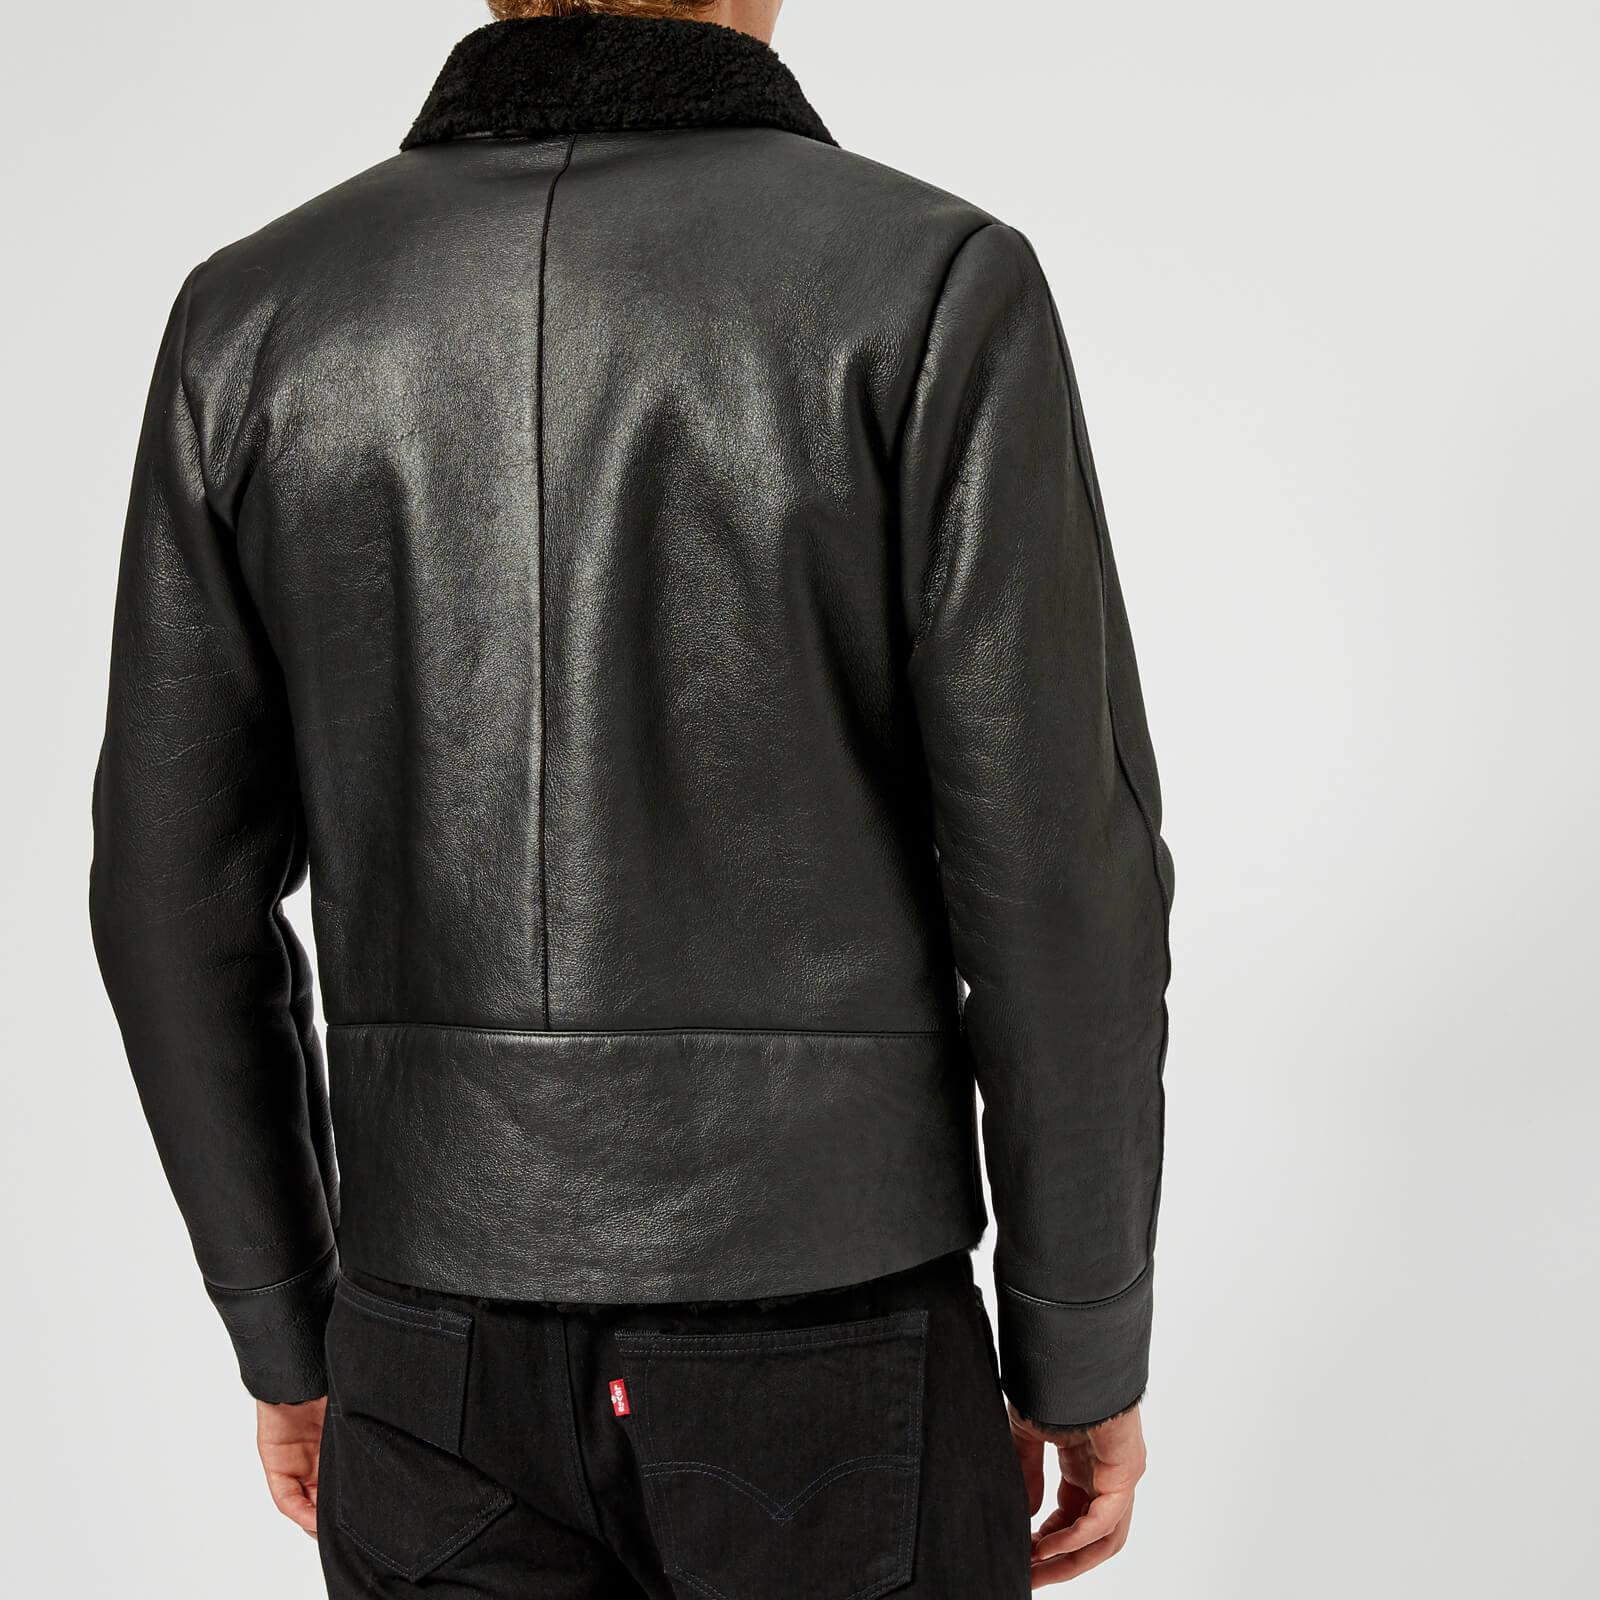 McQ Leather Shearling Biker Jacket in Black for Men - Lyst